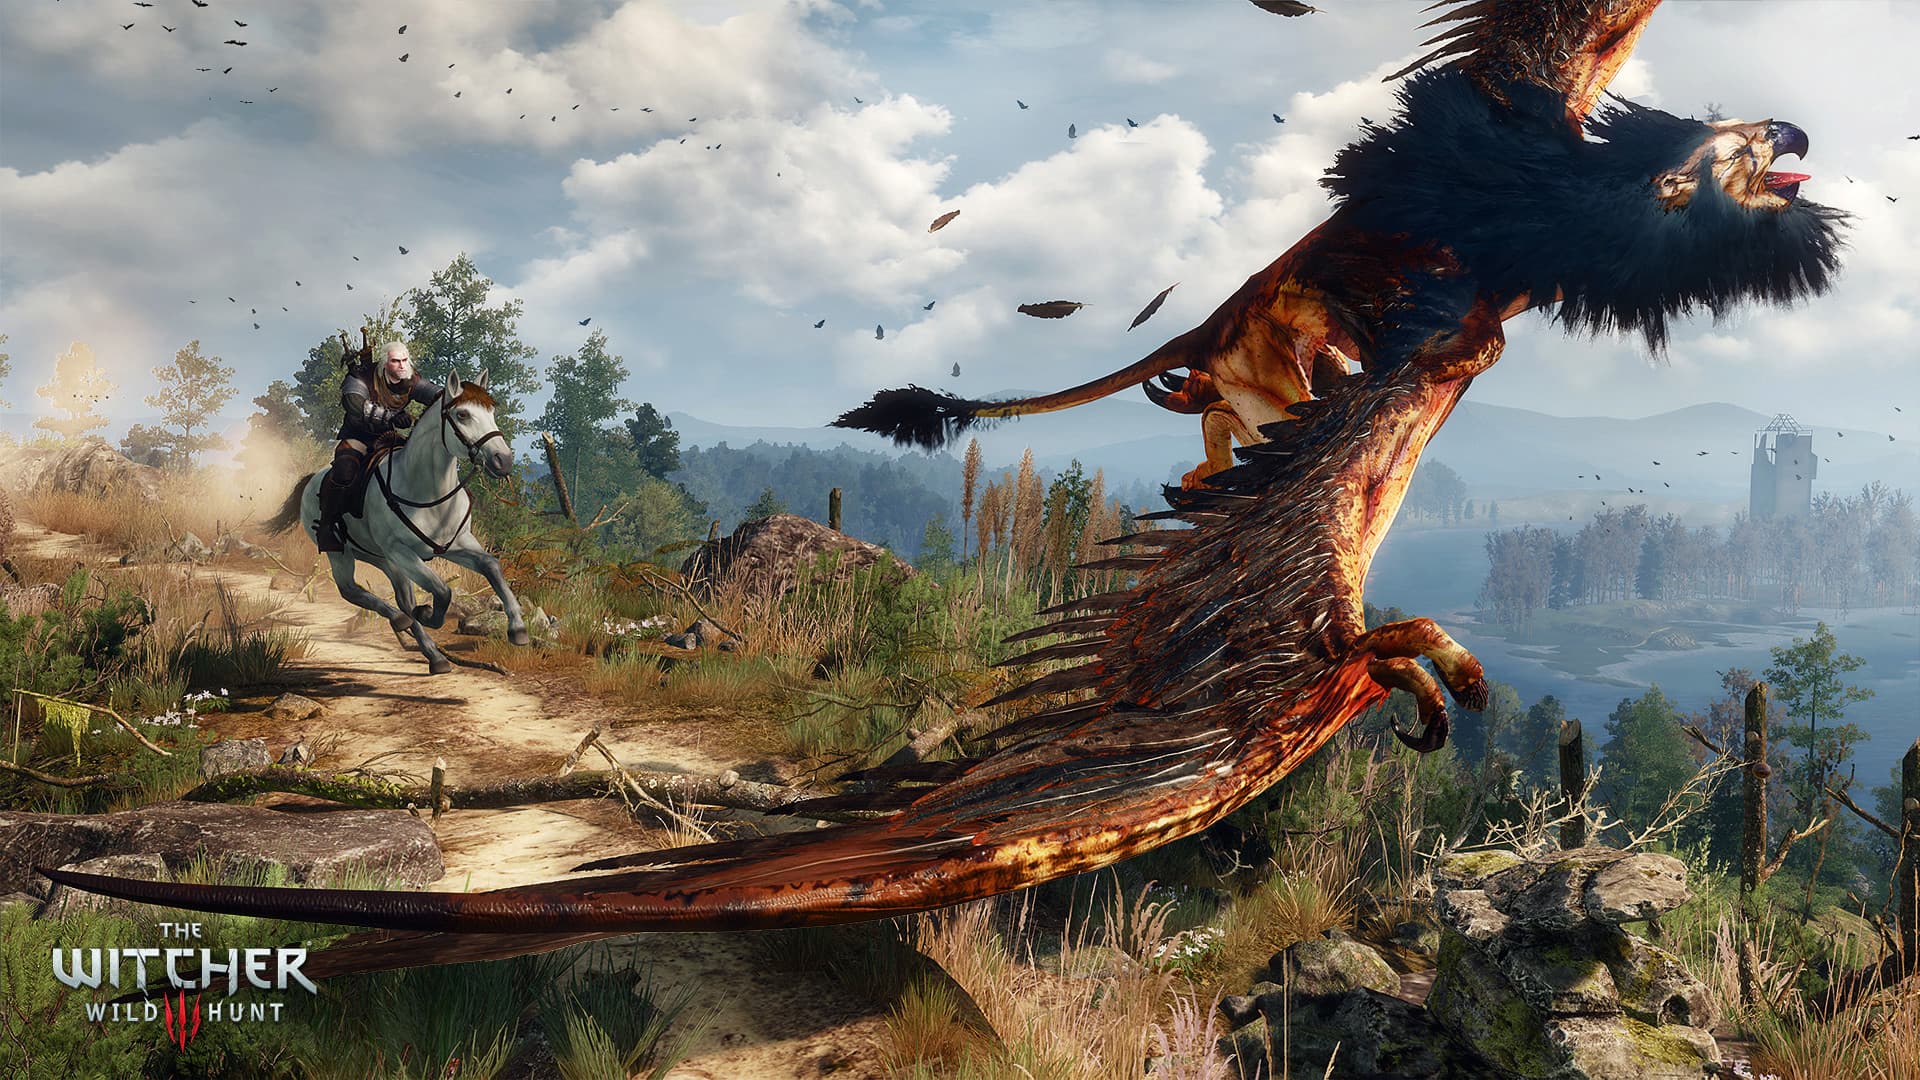 The Witcher 3 Wild Hunt screenshot from steam where we see Geralt riding horseback after a large bird like monster, Witcher 3 Next Gen Update